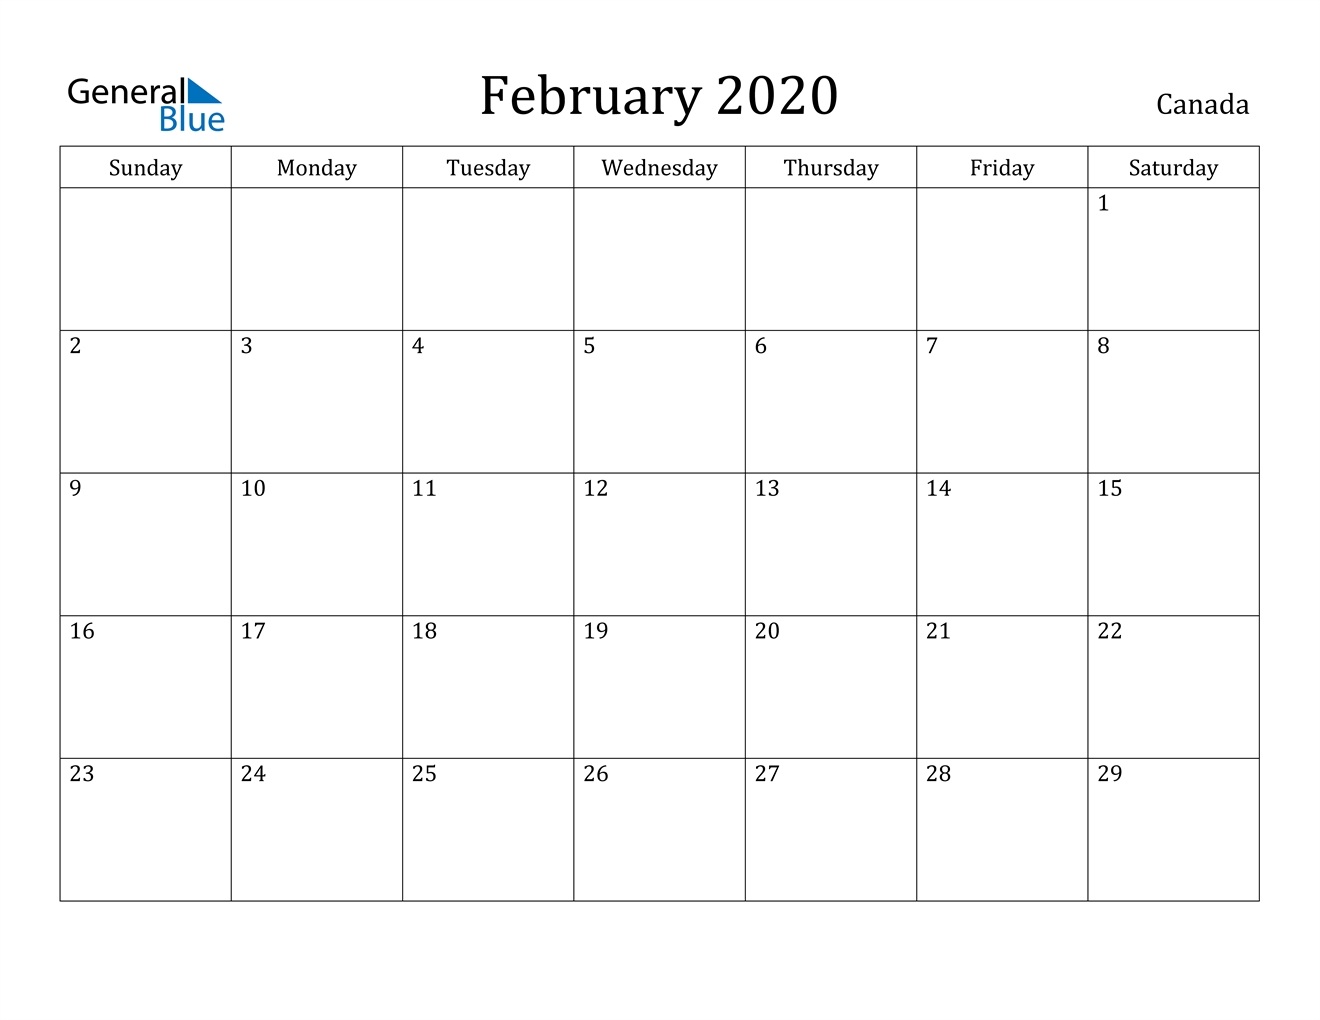 February 2020 Calendar - Canada Incredible February 2020 Calendar Canada